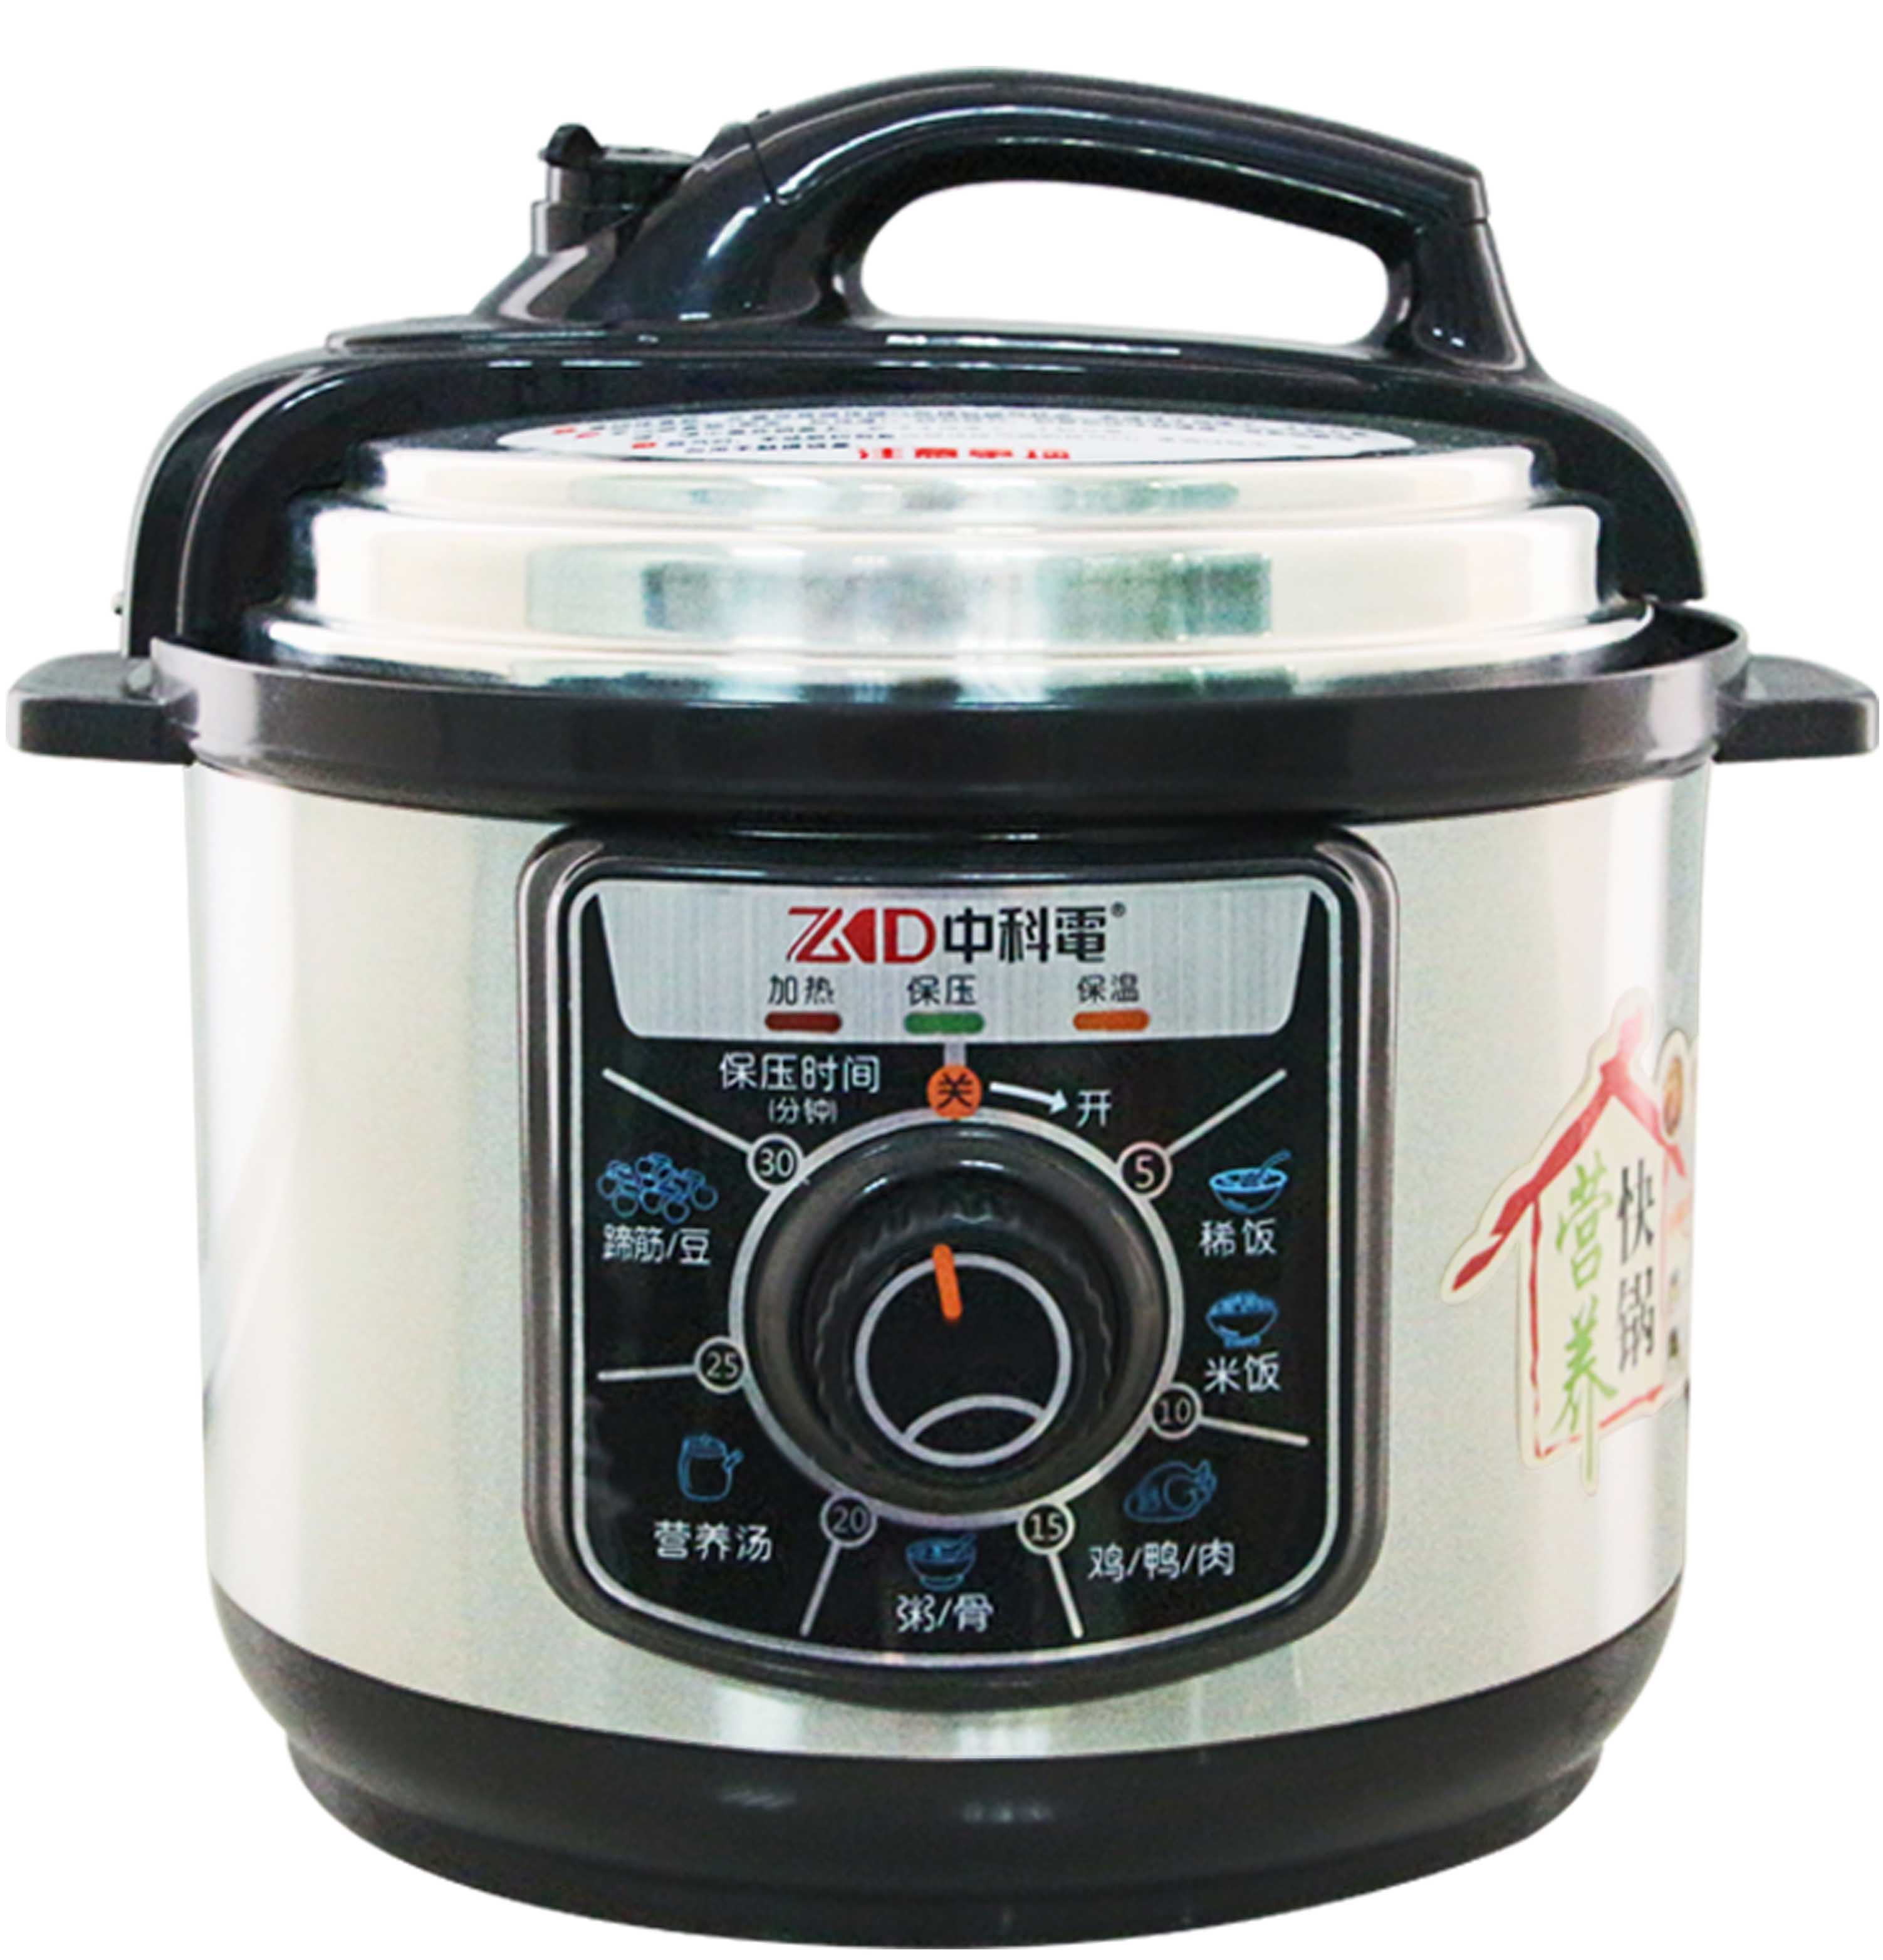 ZKD YINGYUNSTARA Mechanics Pressure Cooker 8.5L Capacity